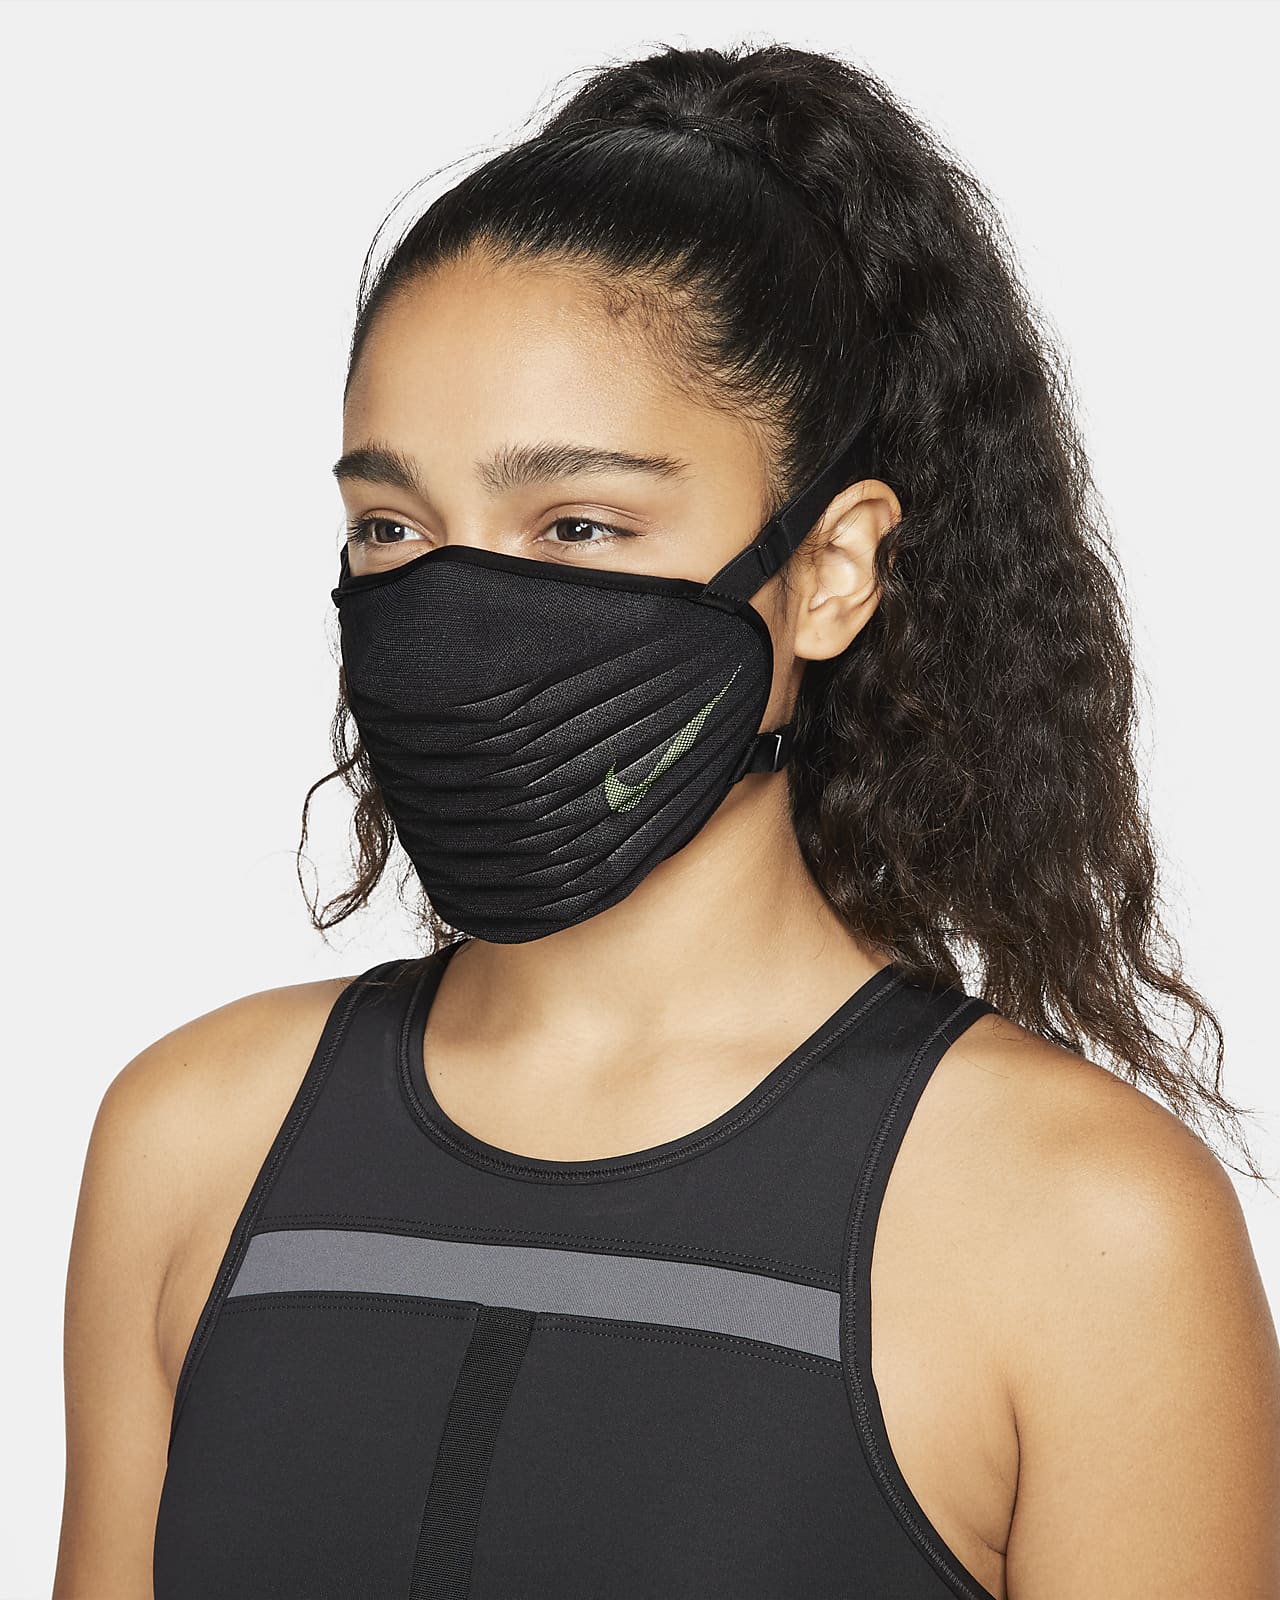 Nike Venturer Performance Face Mask